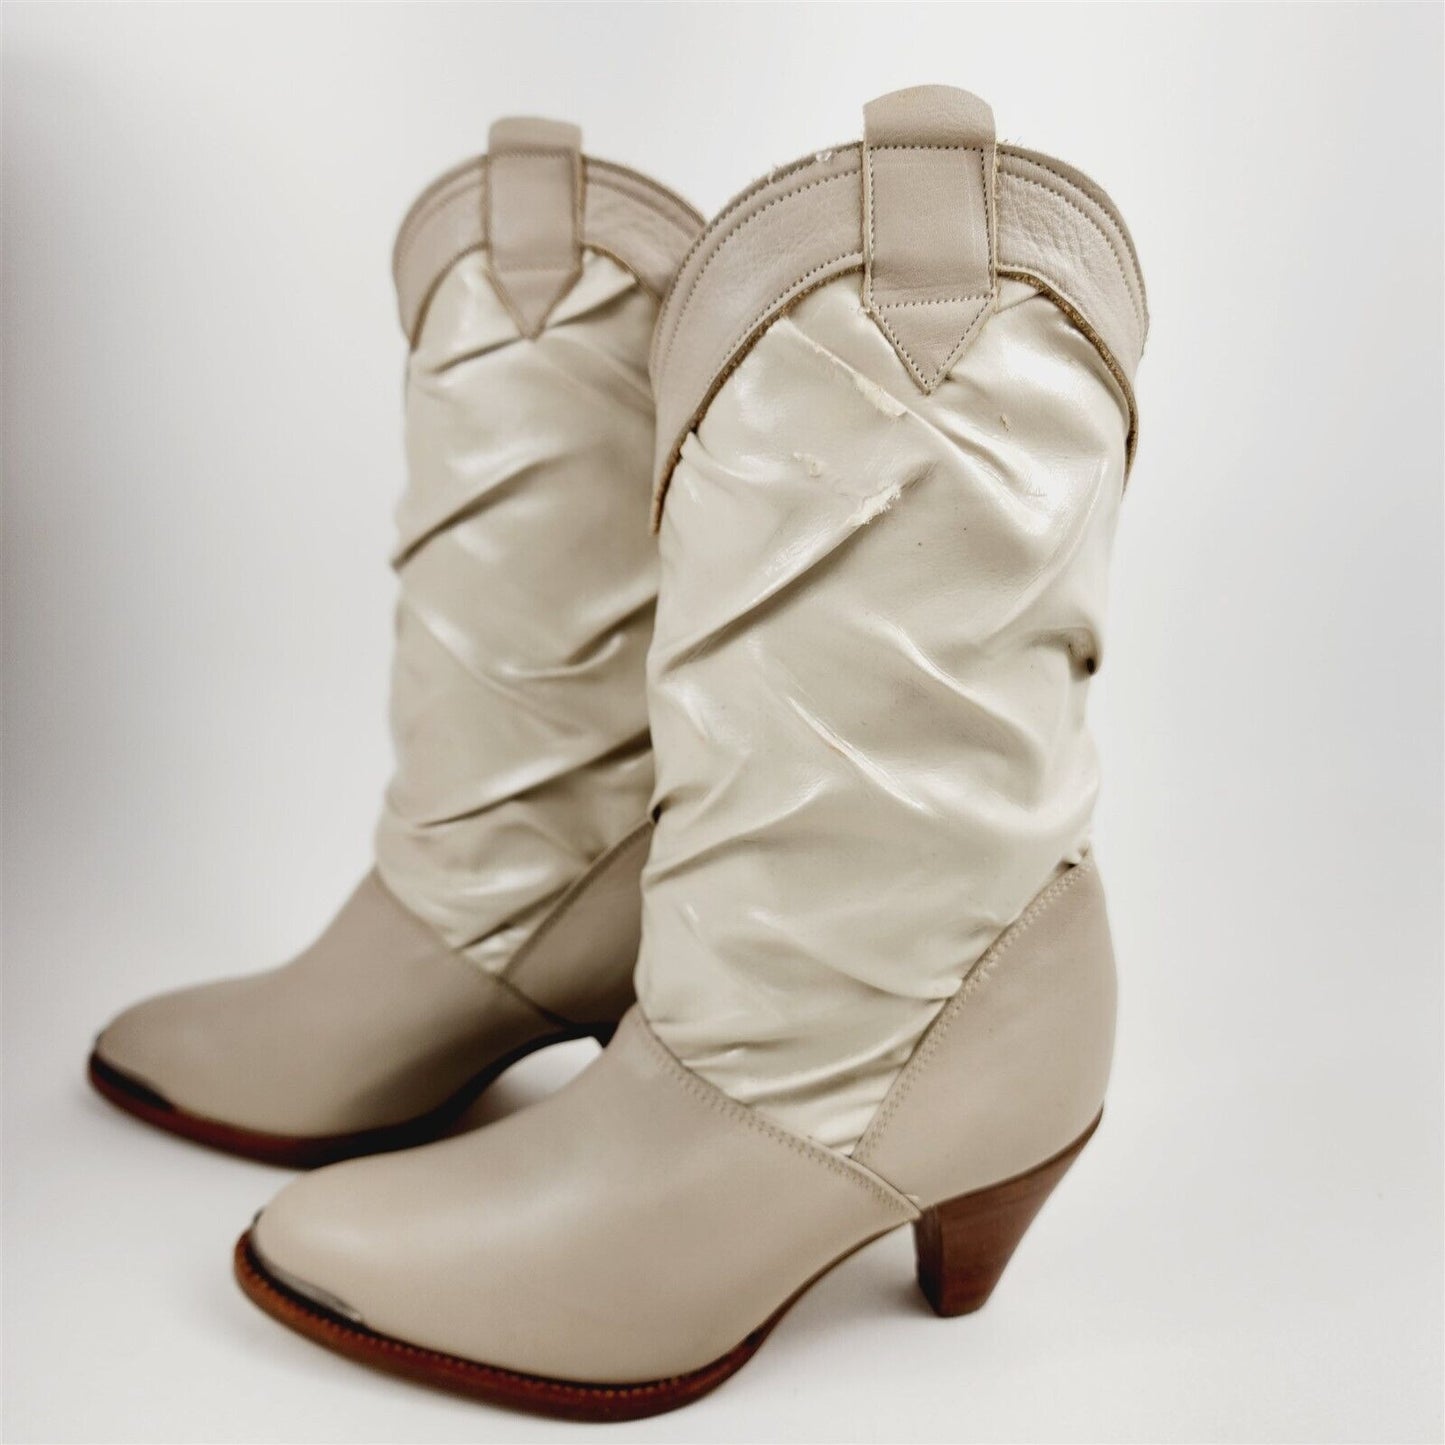 Vintage Laredo Cream Beige Leather Cowboy Boots - New w/ Box - Size 6B